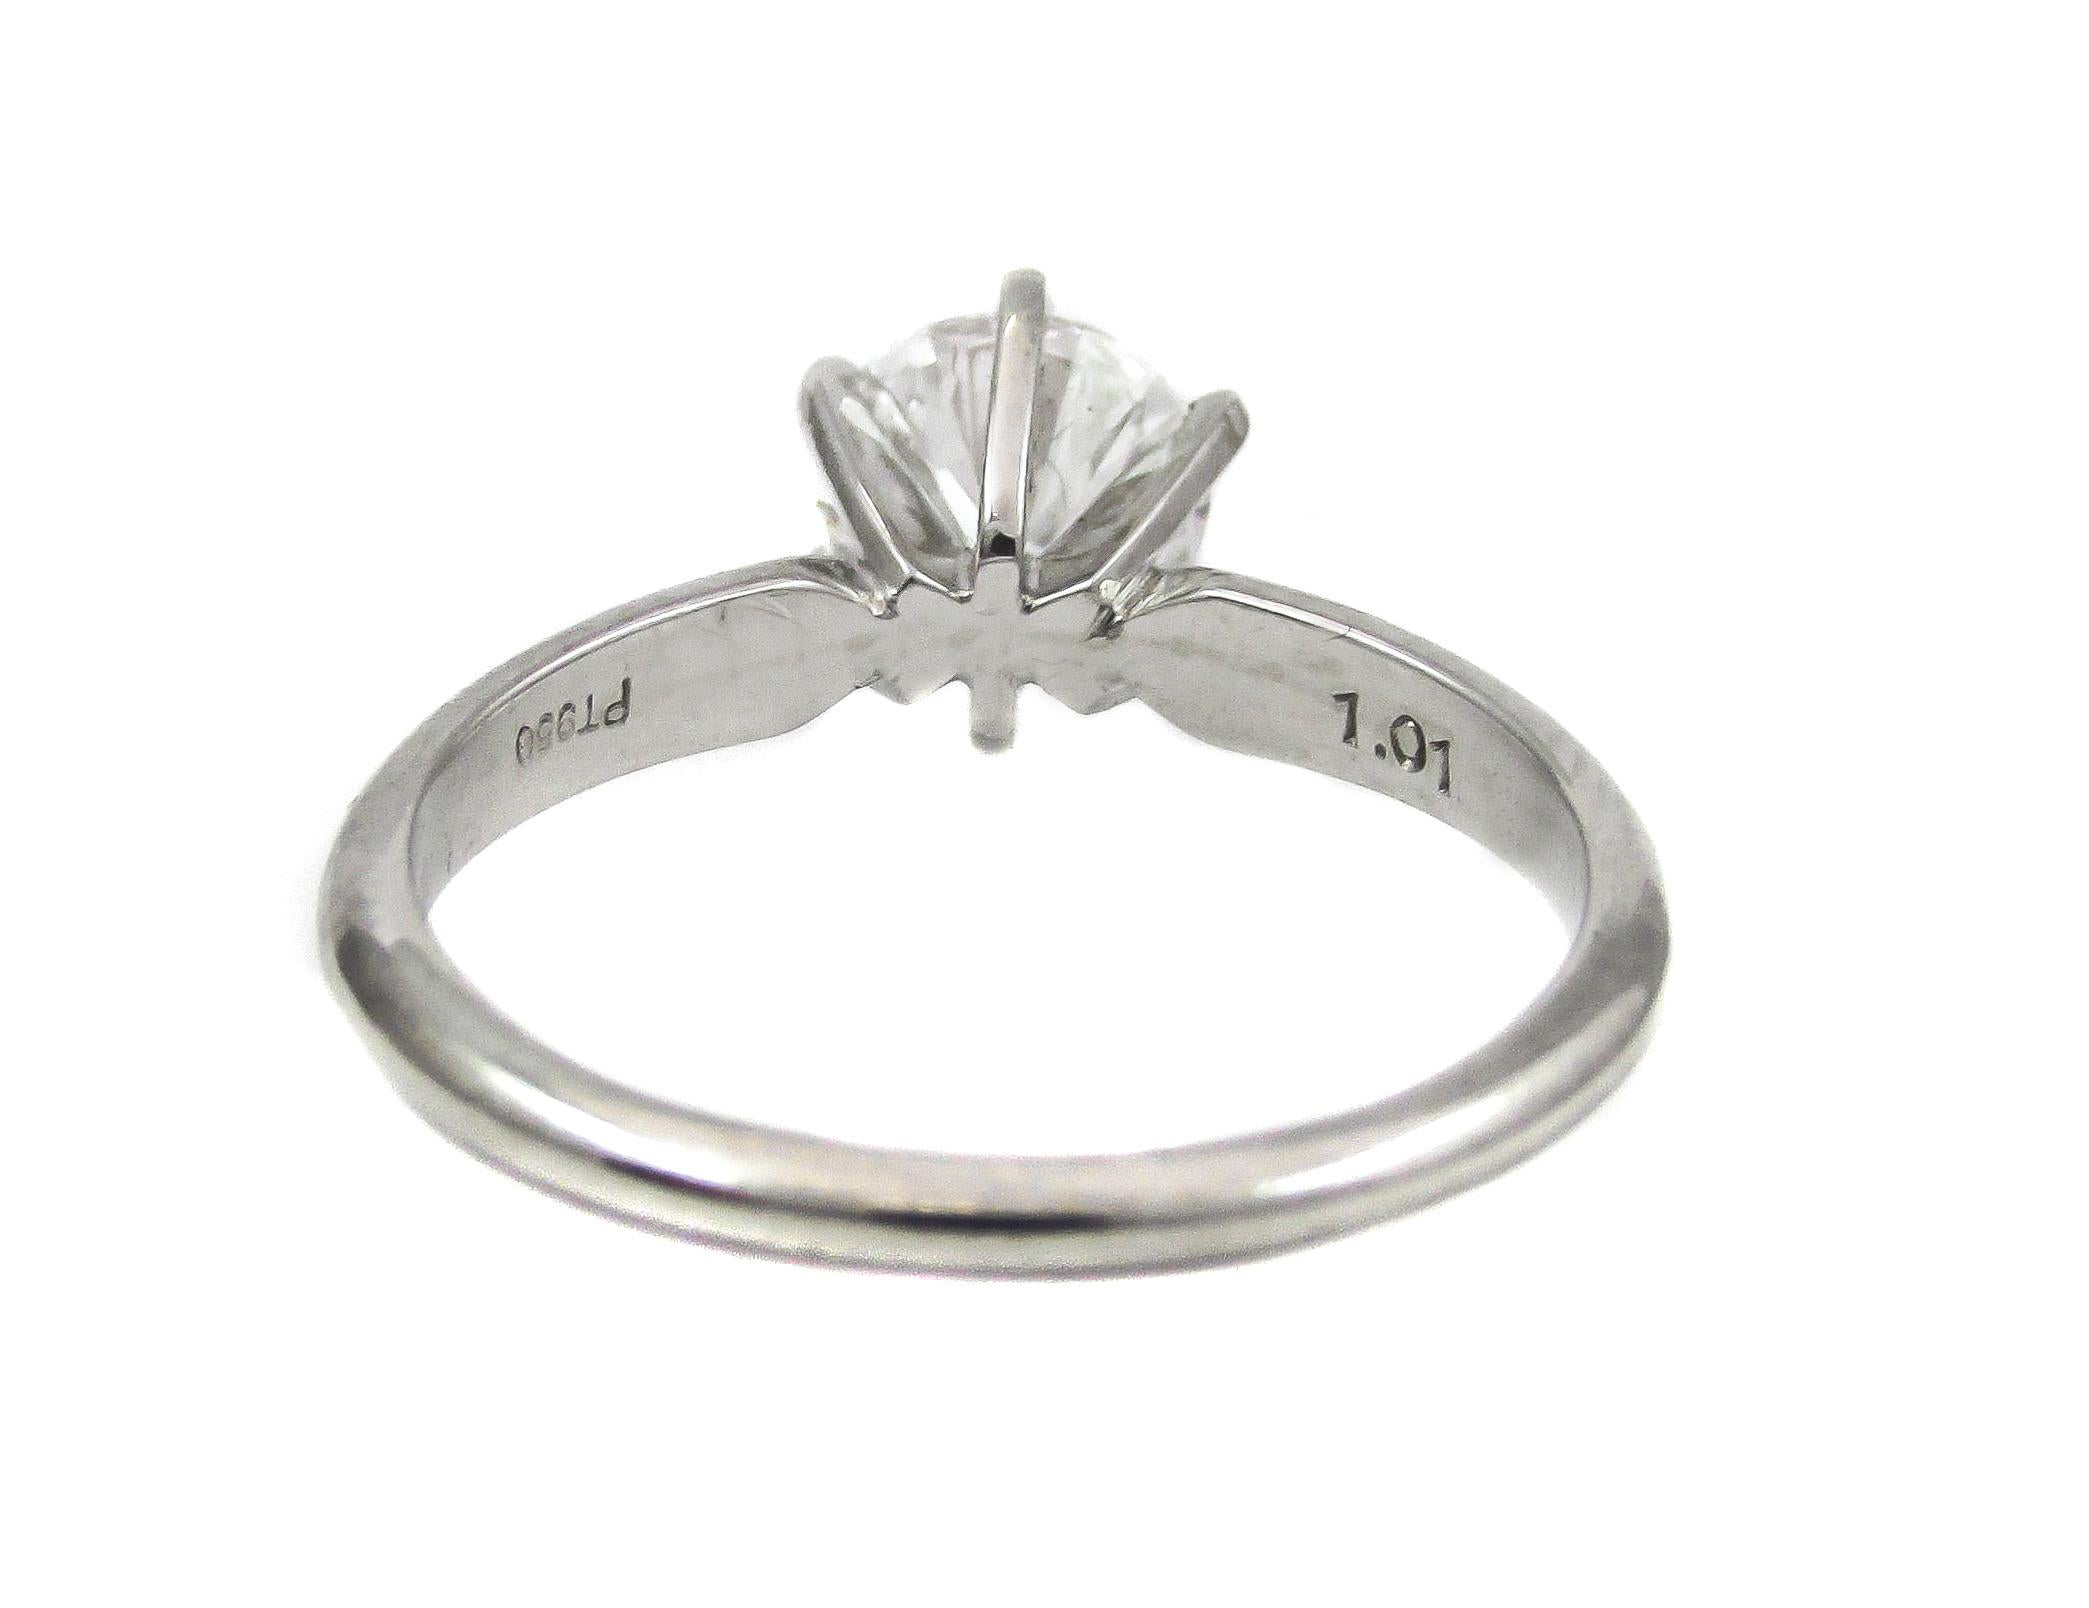 1 carat flawless diamond ring